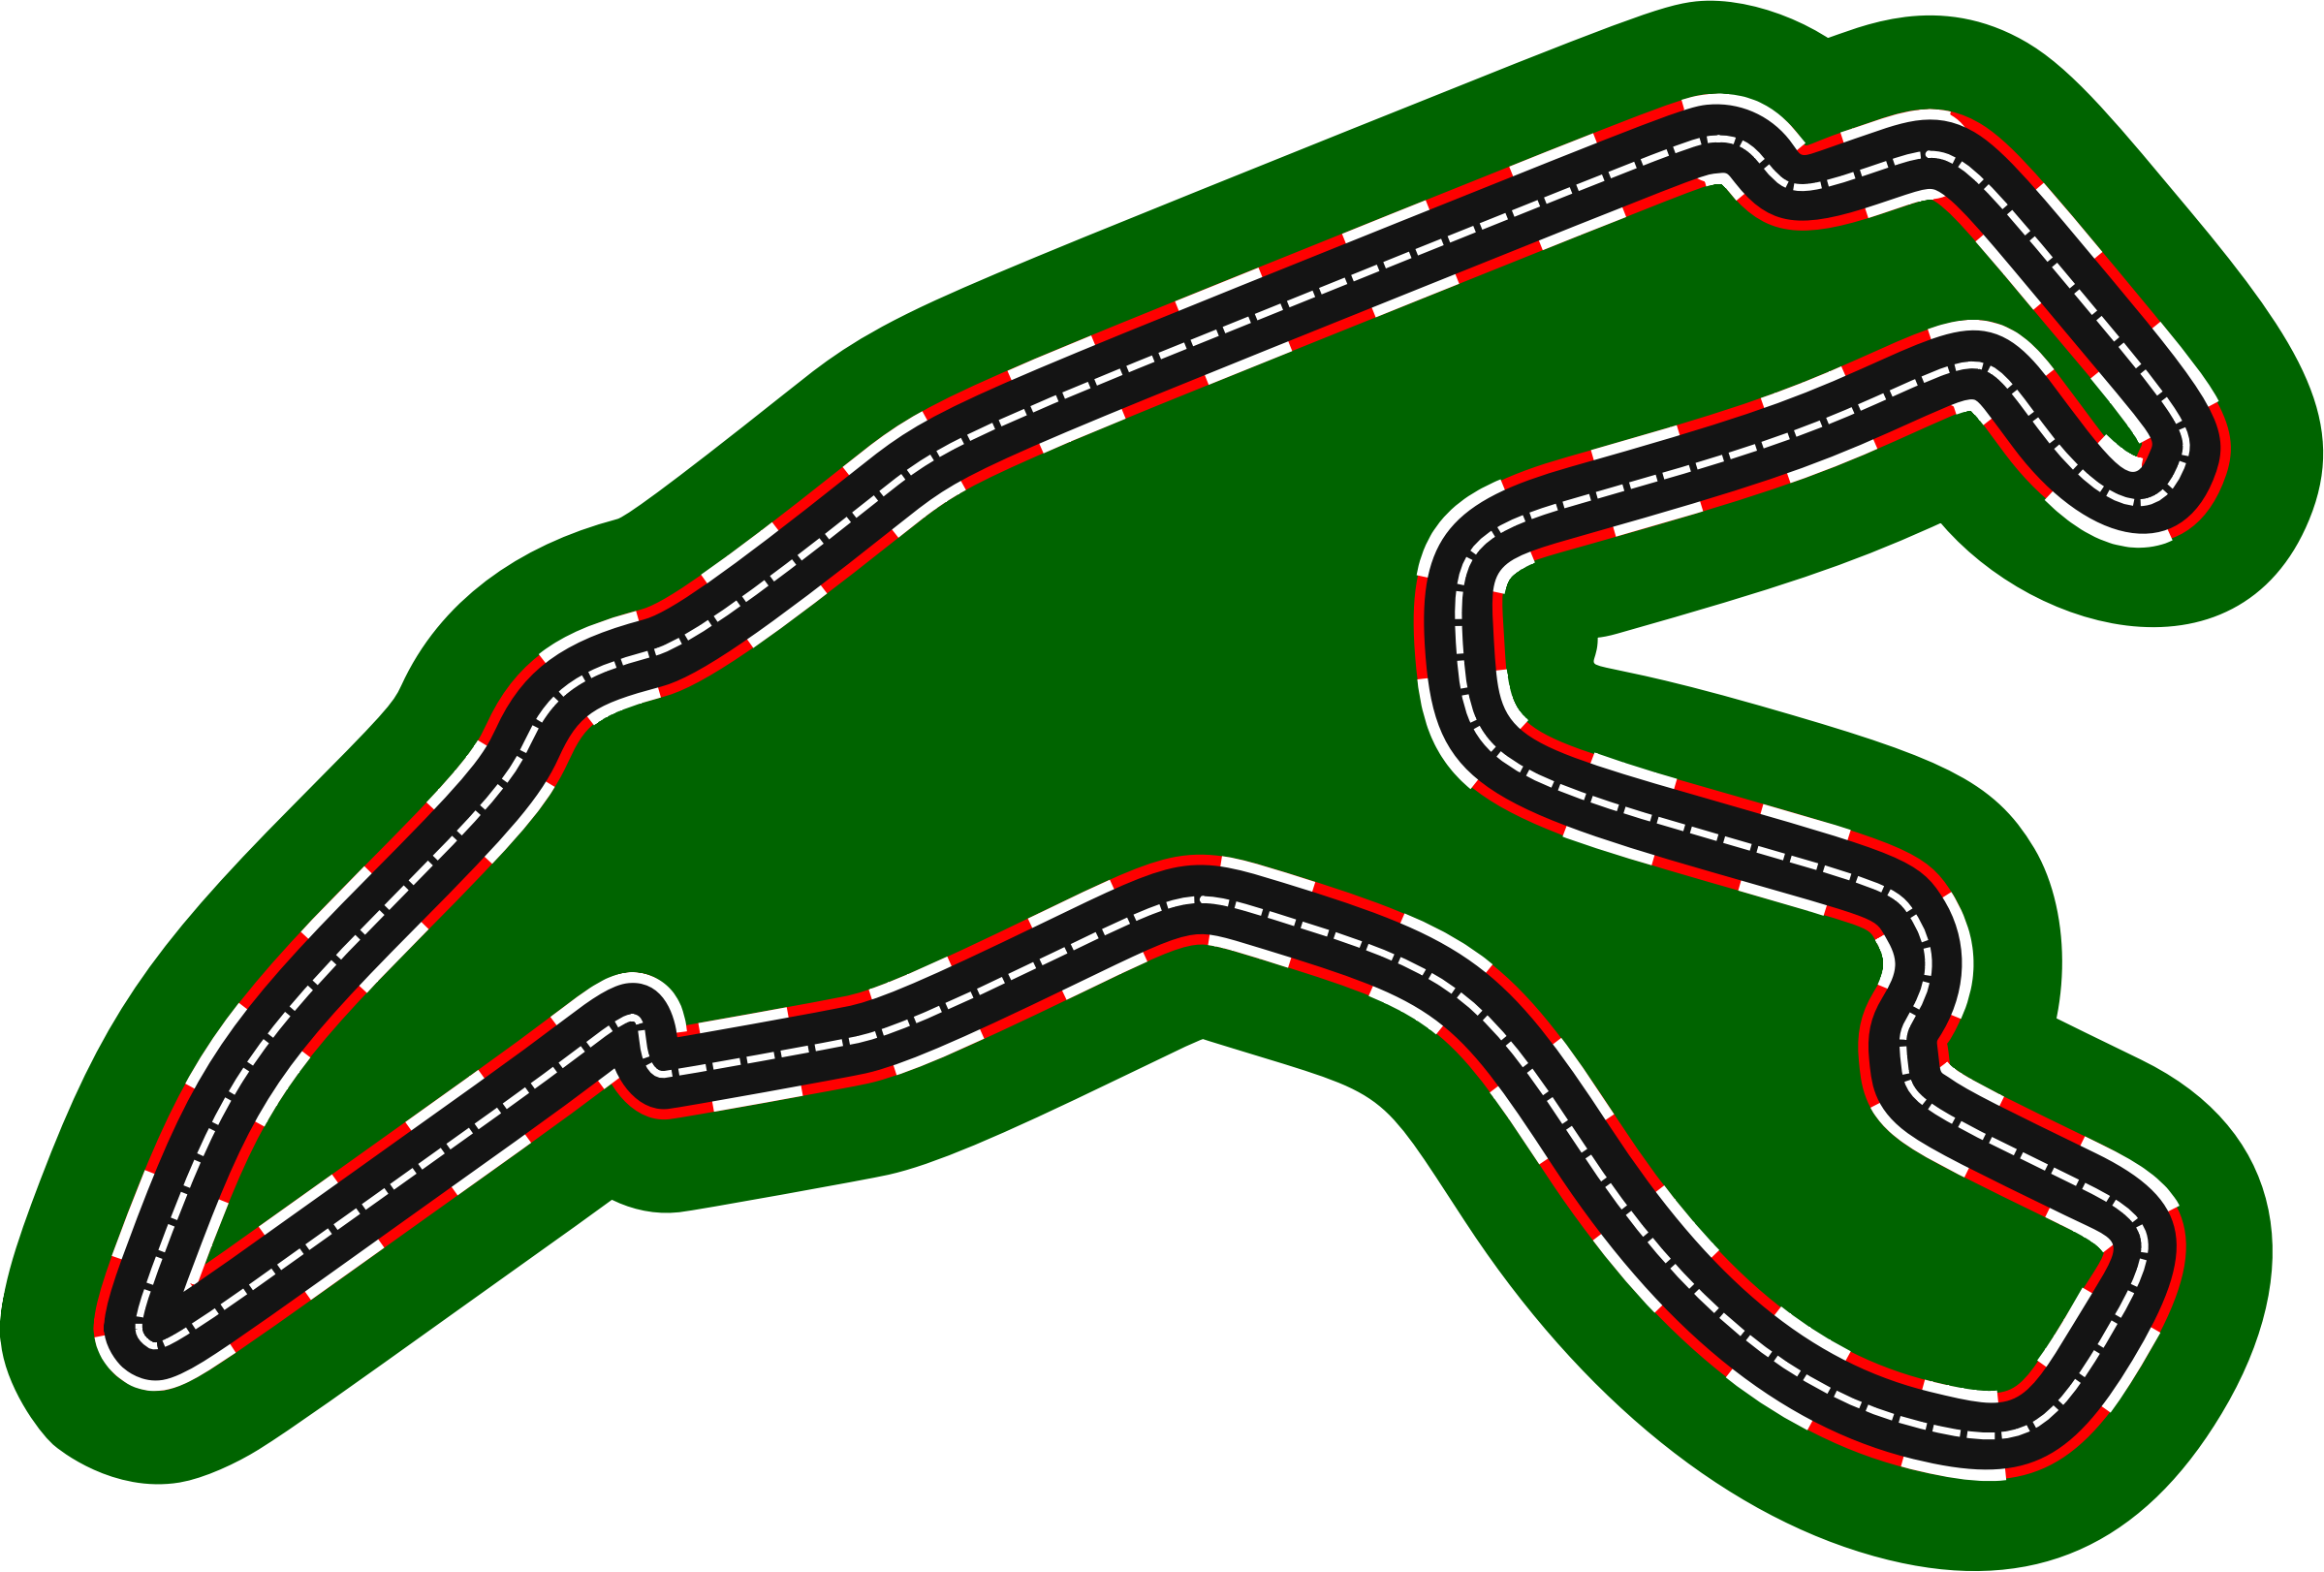 Big Image - Race Track (2398x1622)